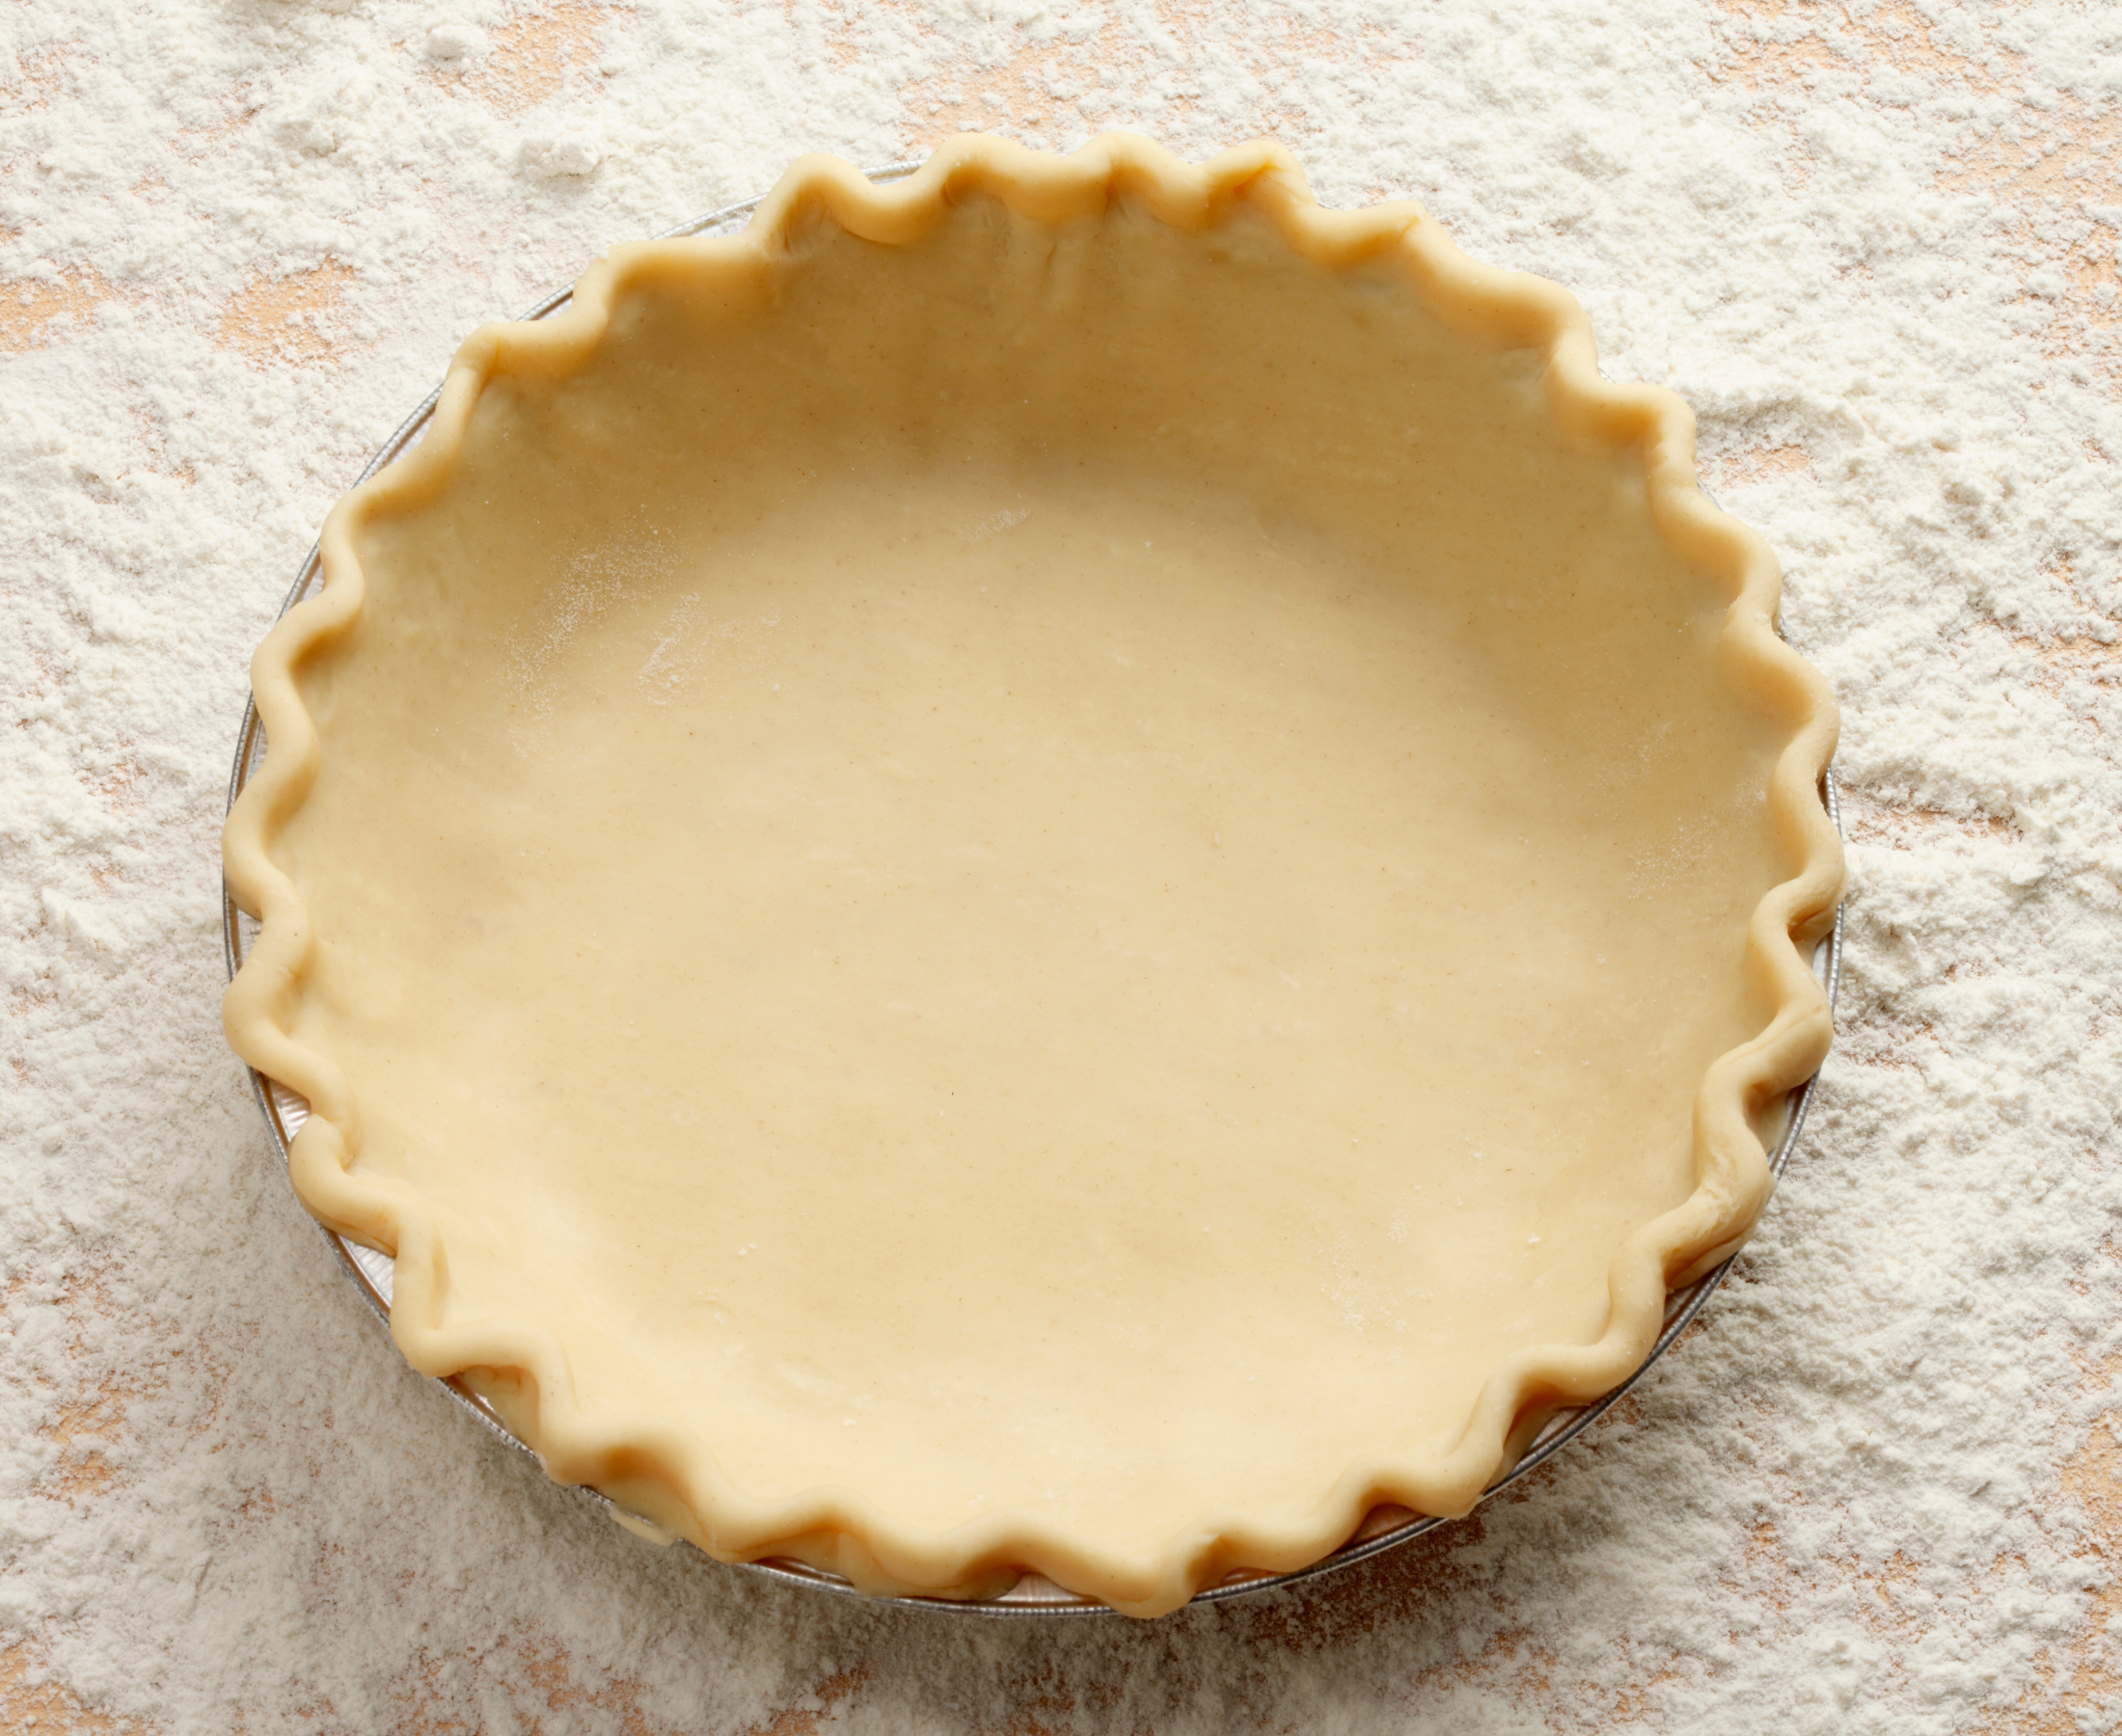 Easy No-fail Pie Crust Recipe